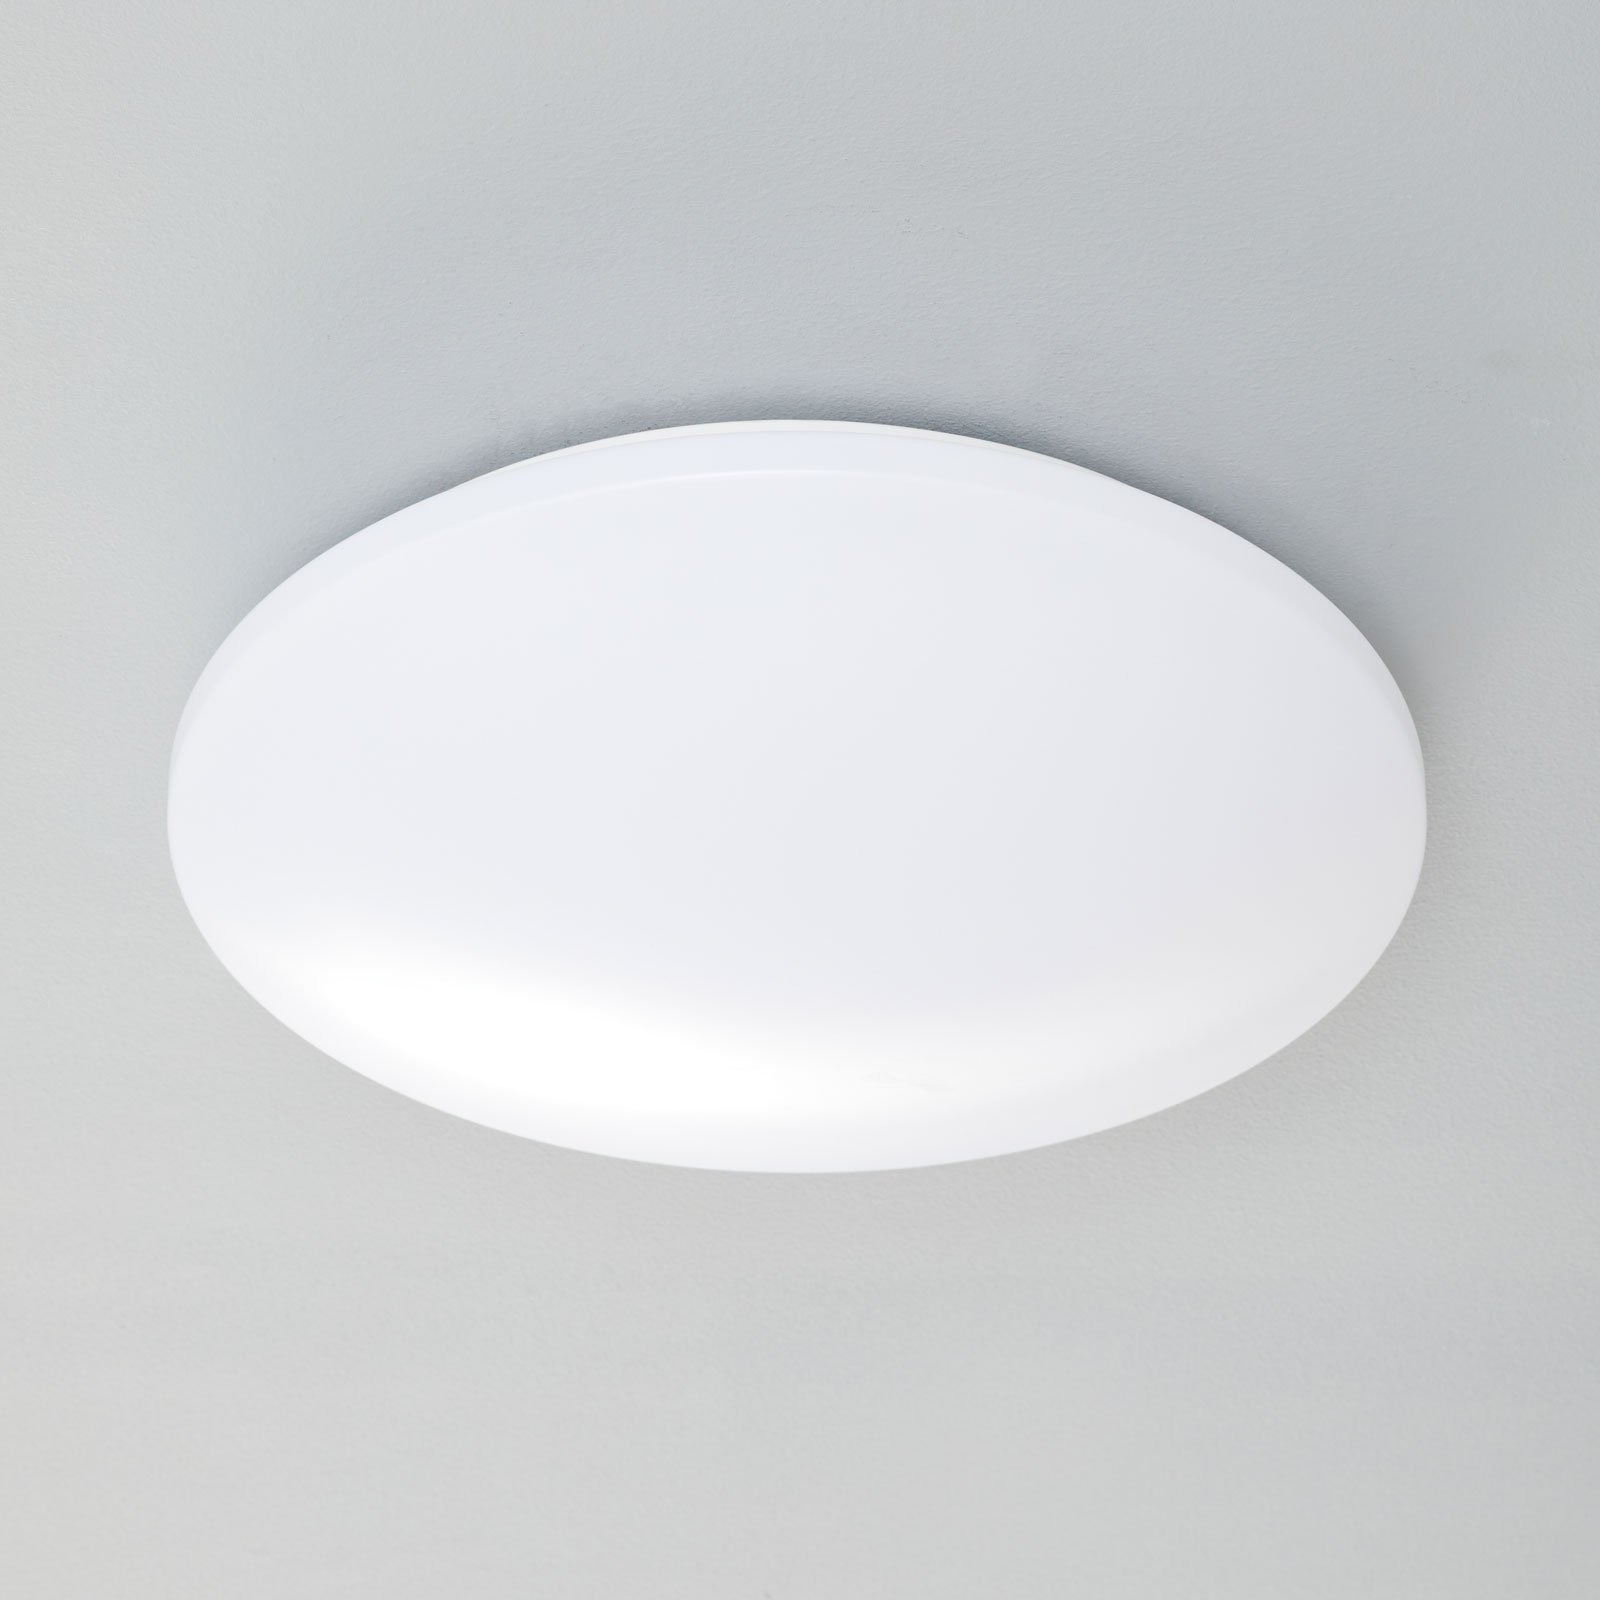 LED plafondlamp Pollux, bewegingsmelder, Ø 40 cm